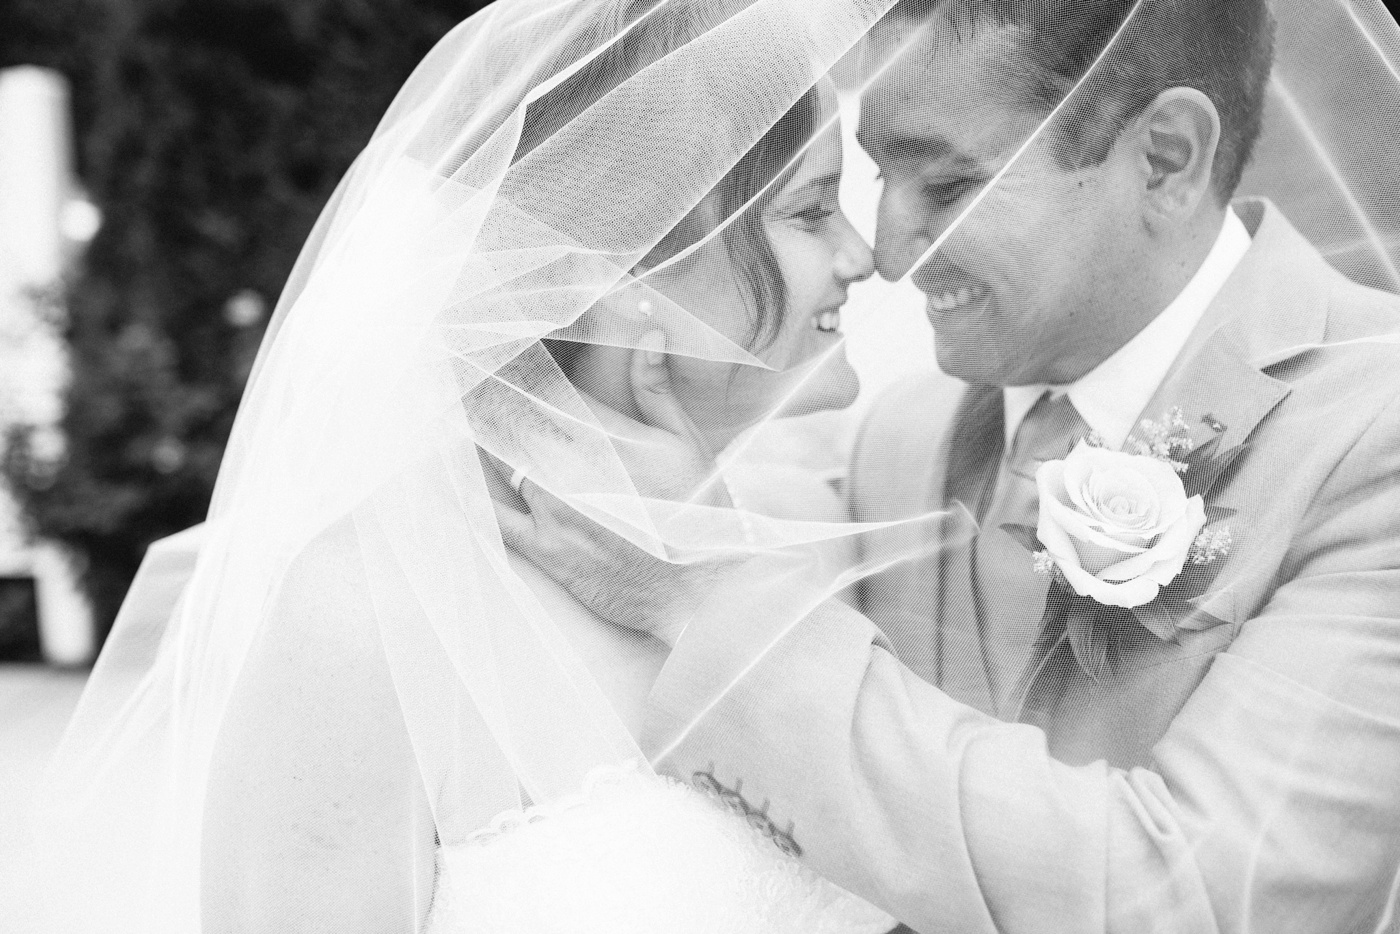 Amanda + Ruben - The Carriage House Wedding - Galloway New Jersey Photographer - Alison Dunn Photography photo